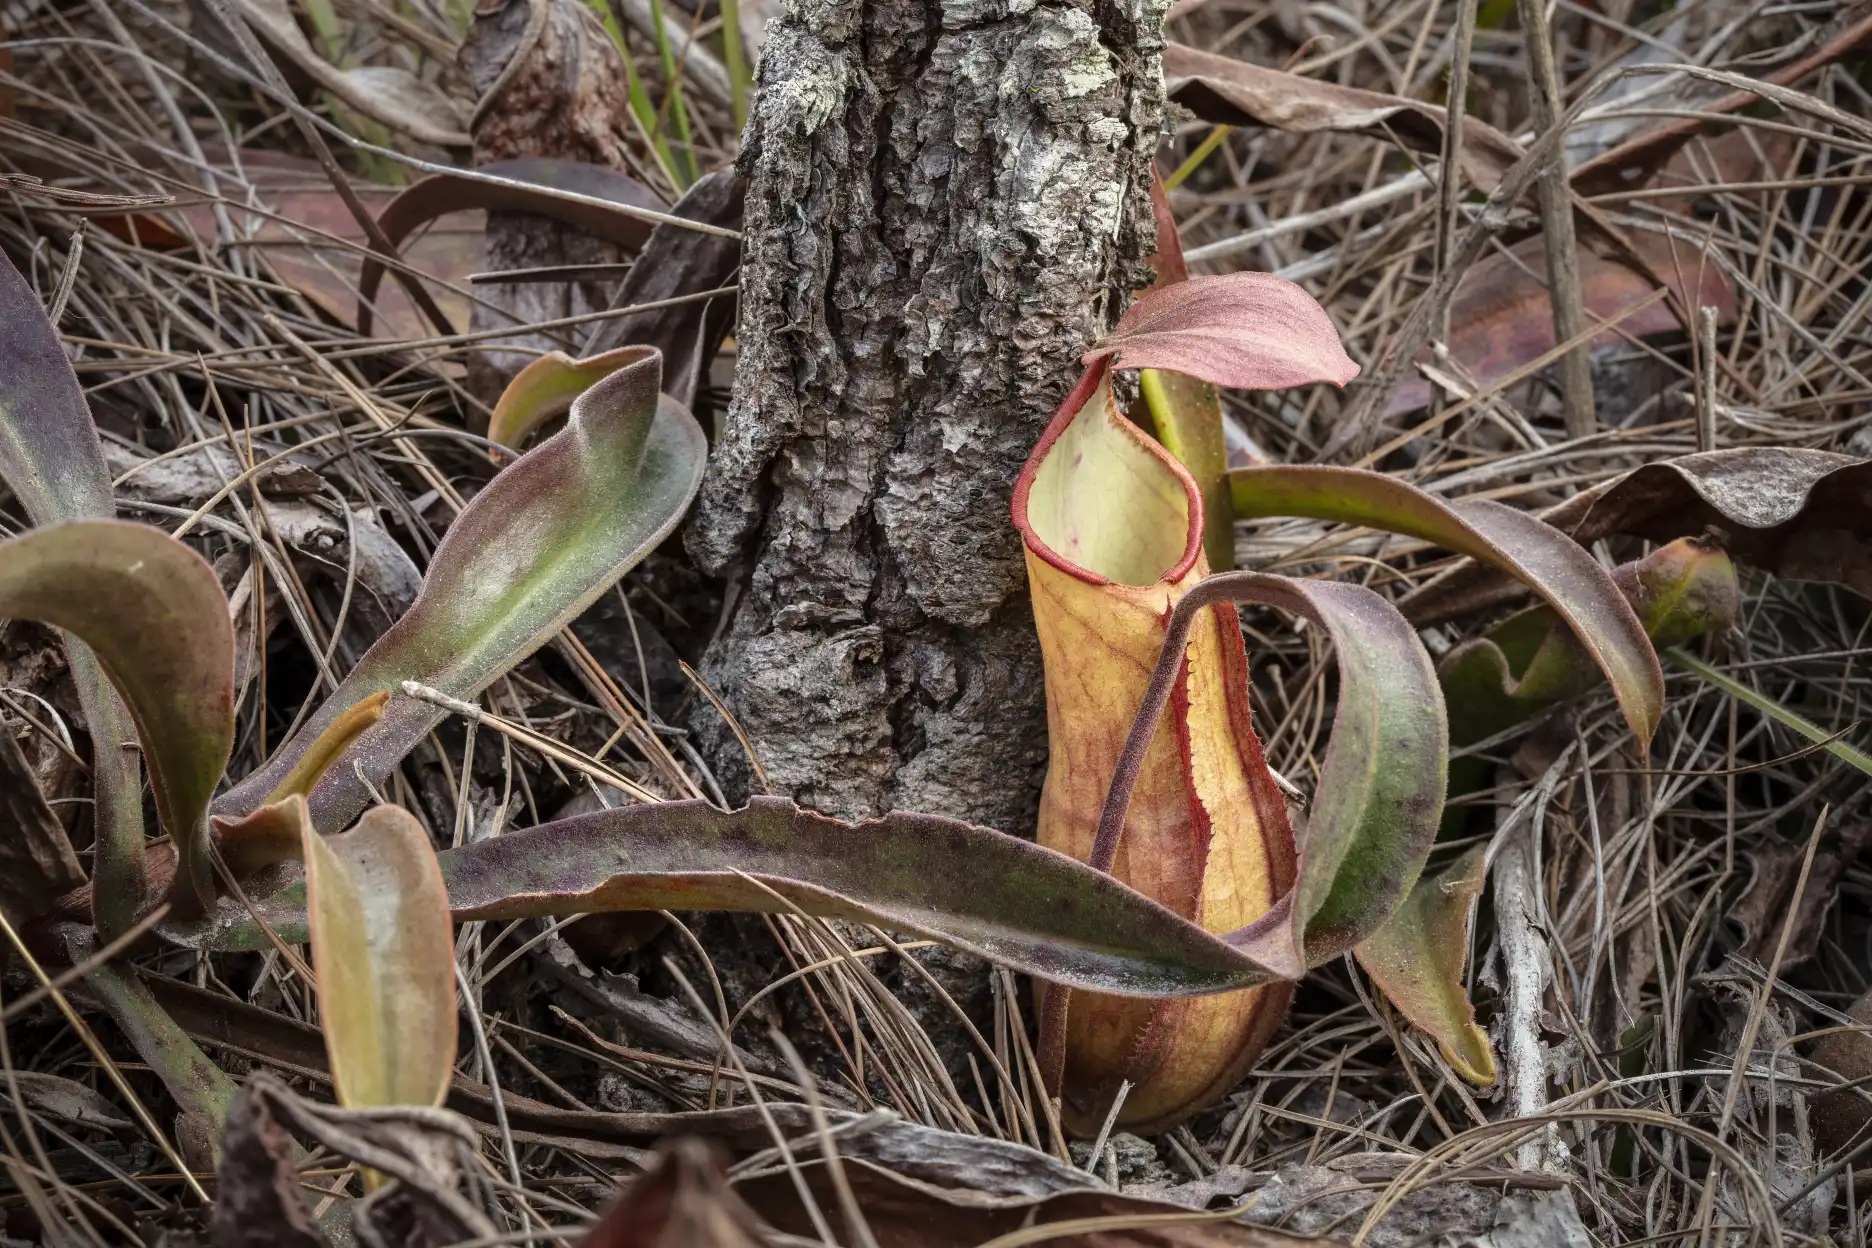 Nepenthes smilesii plants